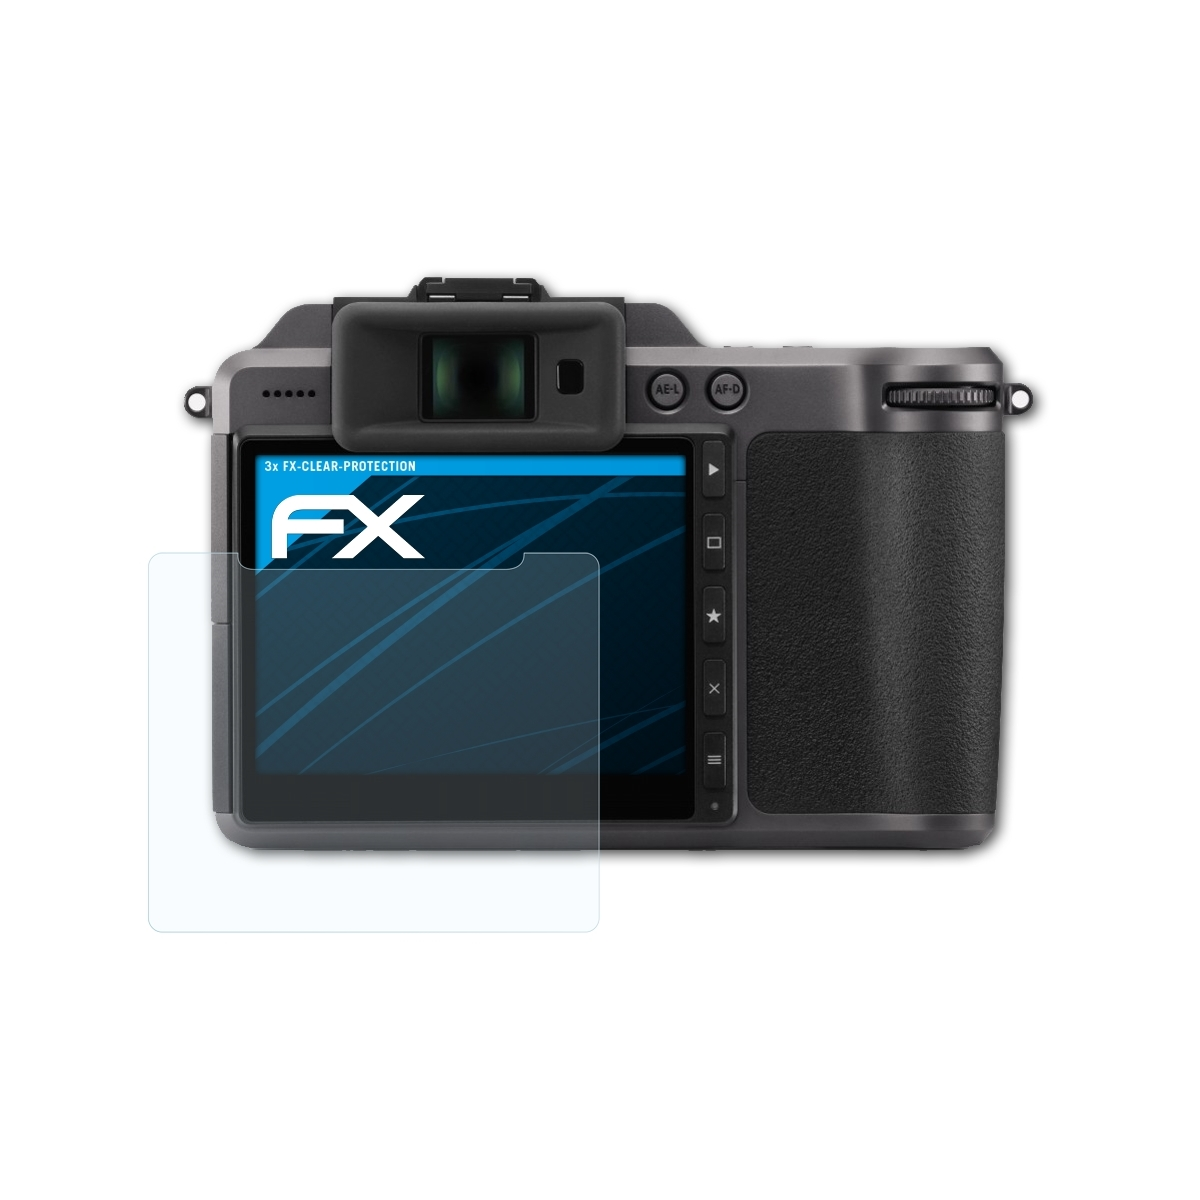 ATFOLIX 3x Hasselblad II X1D FX-Clear 50C) Displayschutz(für